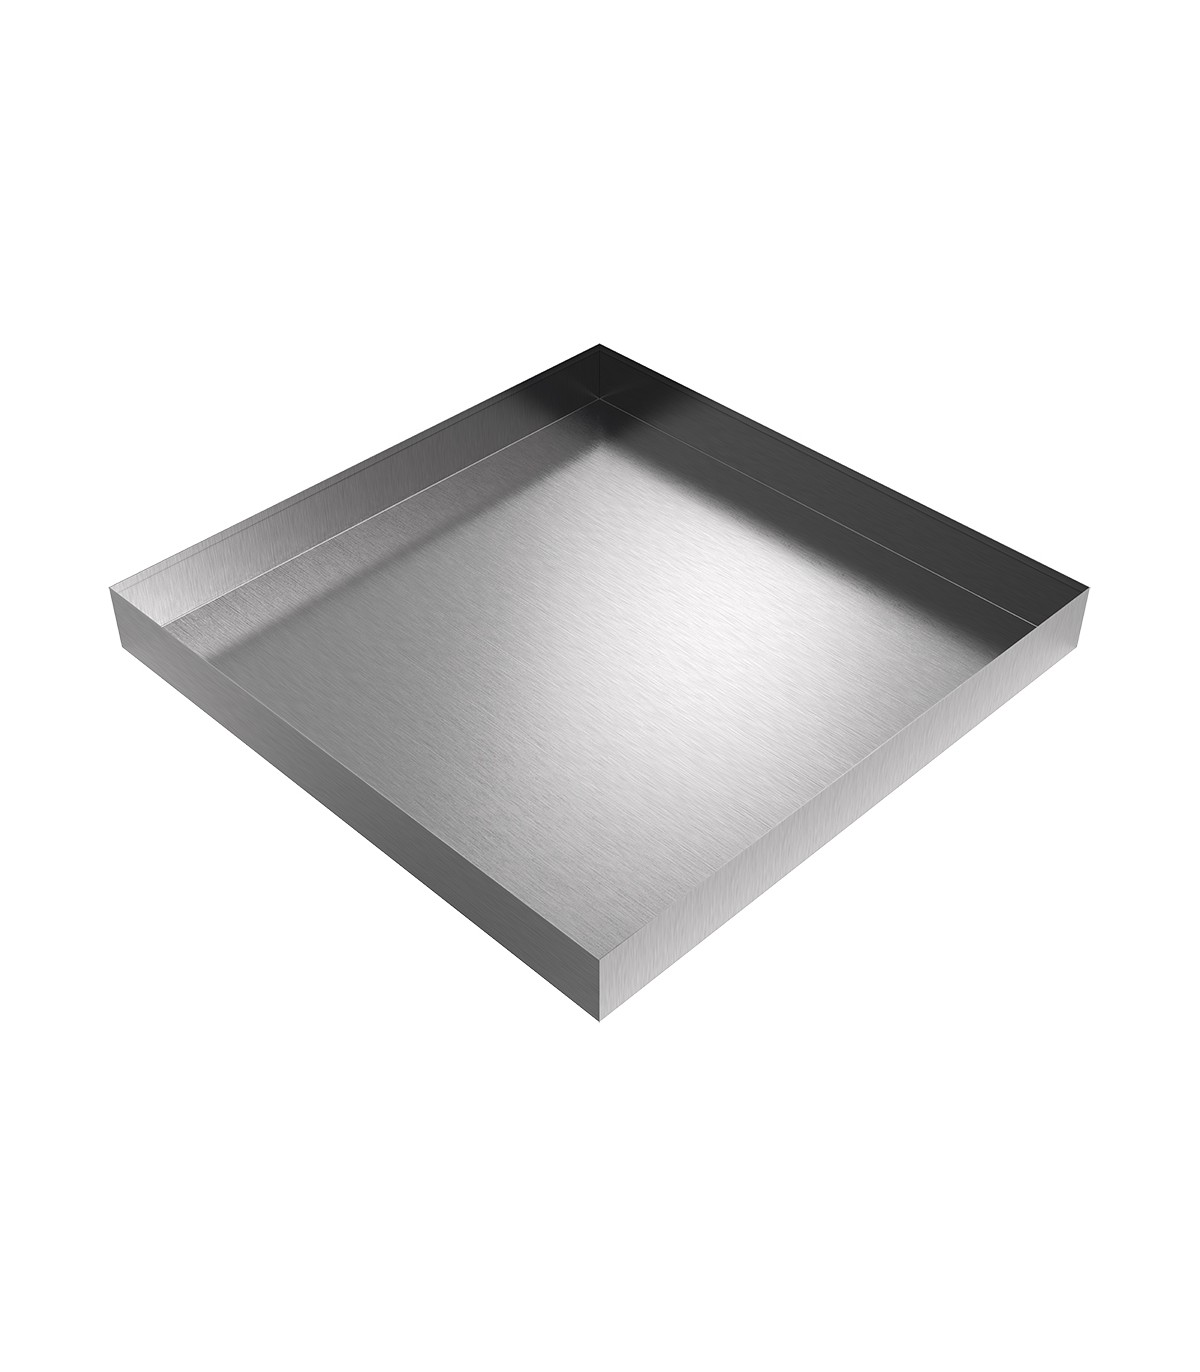 Stainless Steel Round Baking Dish 36 cm ST10561000 STEELPAN